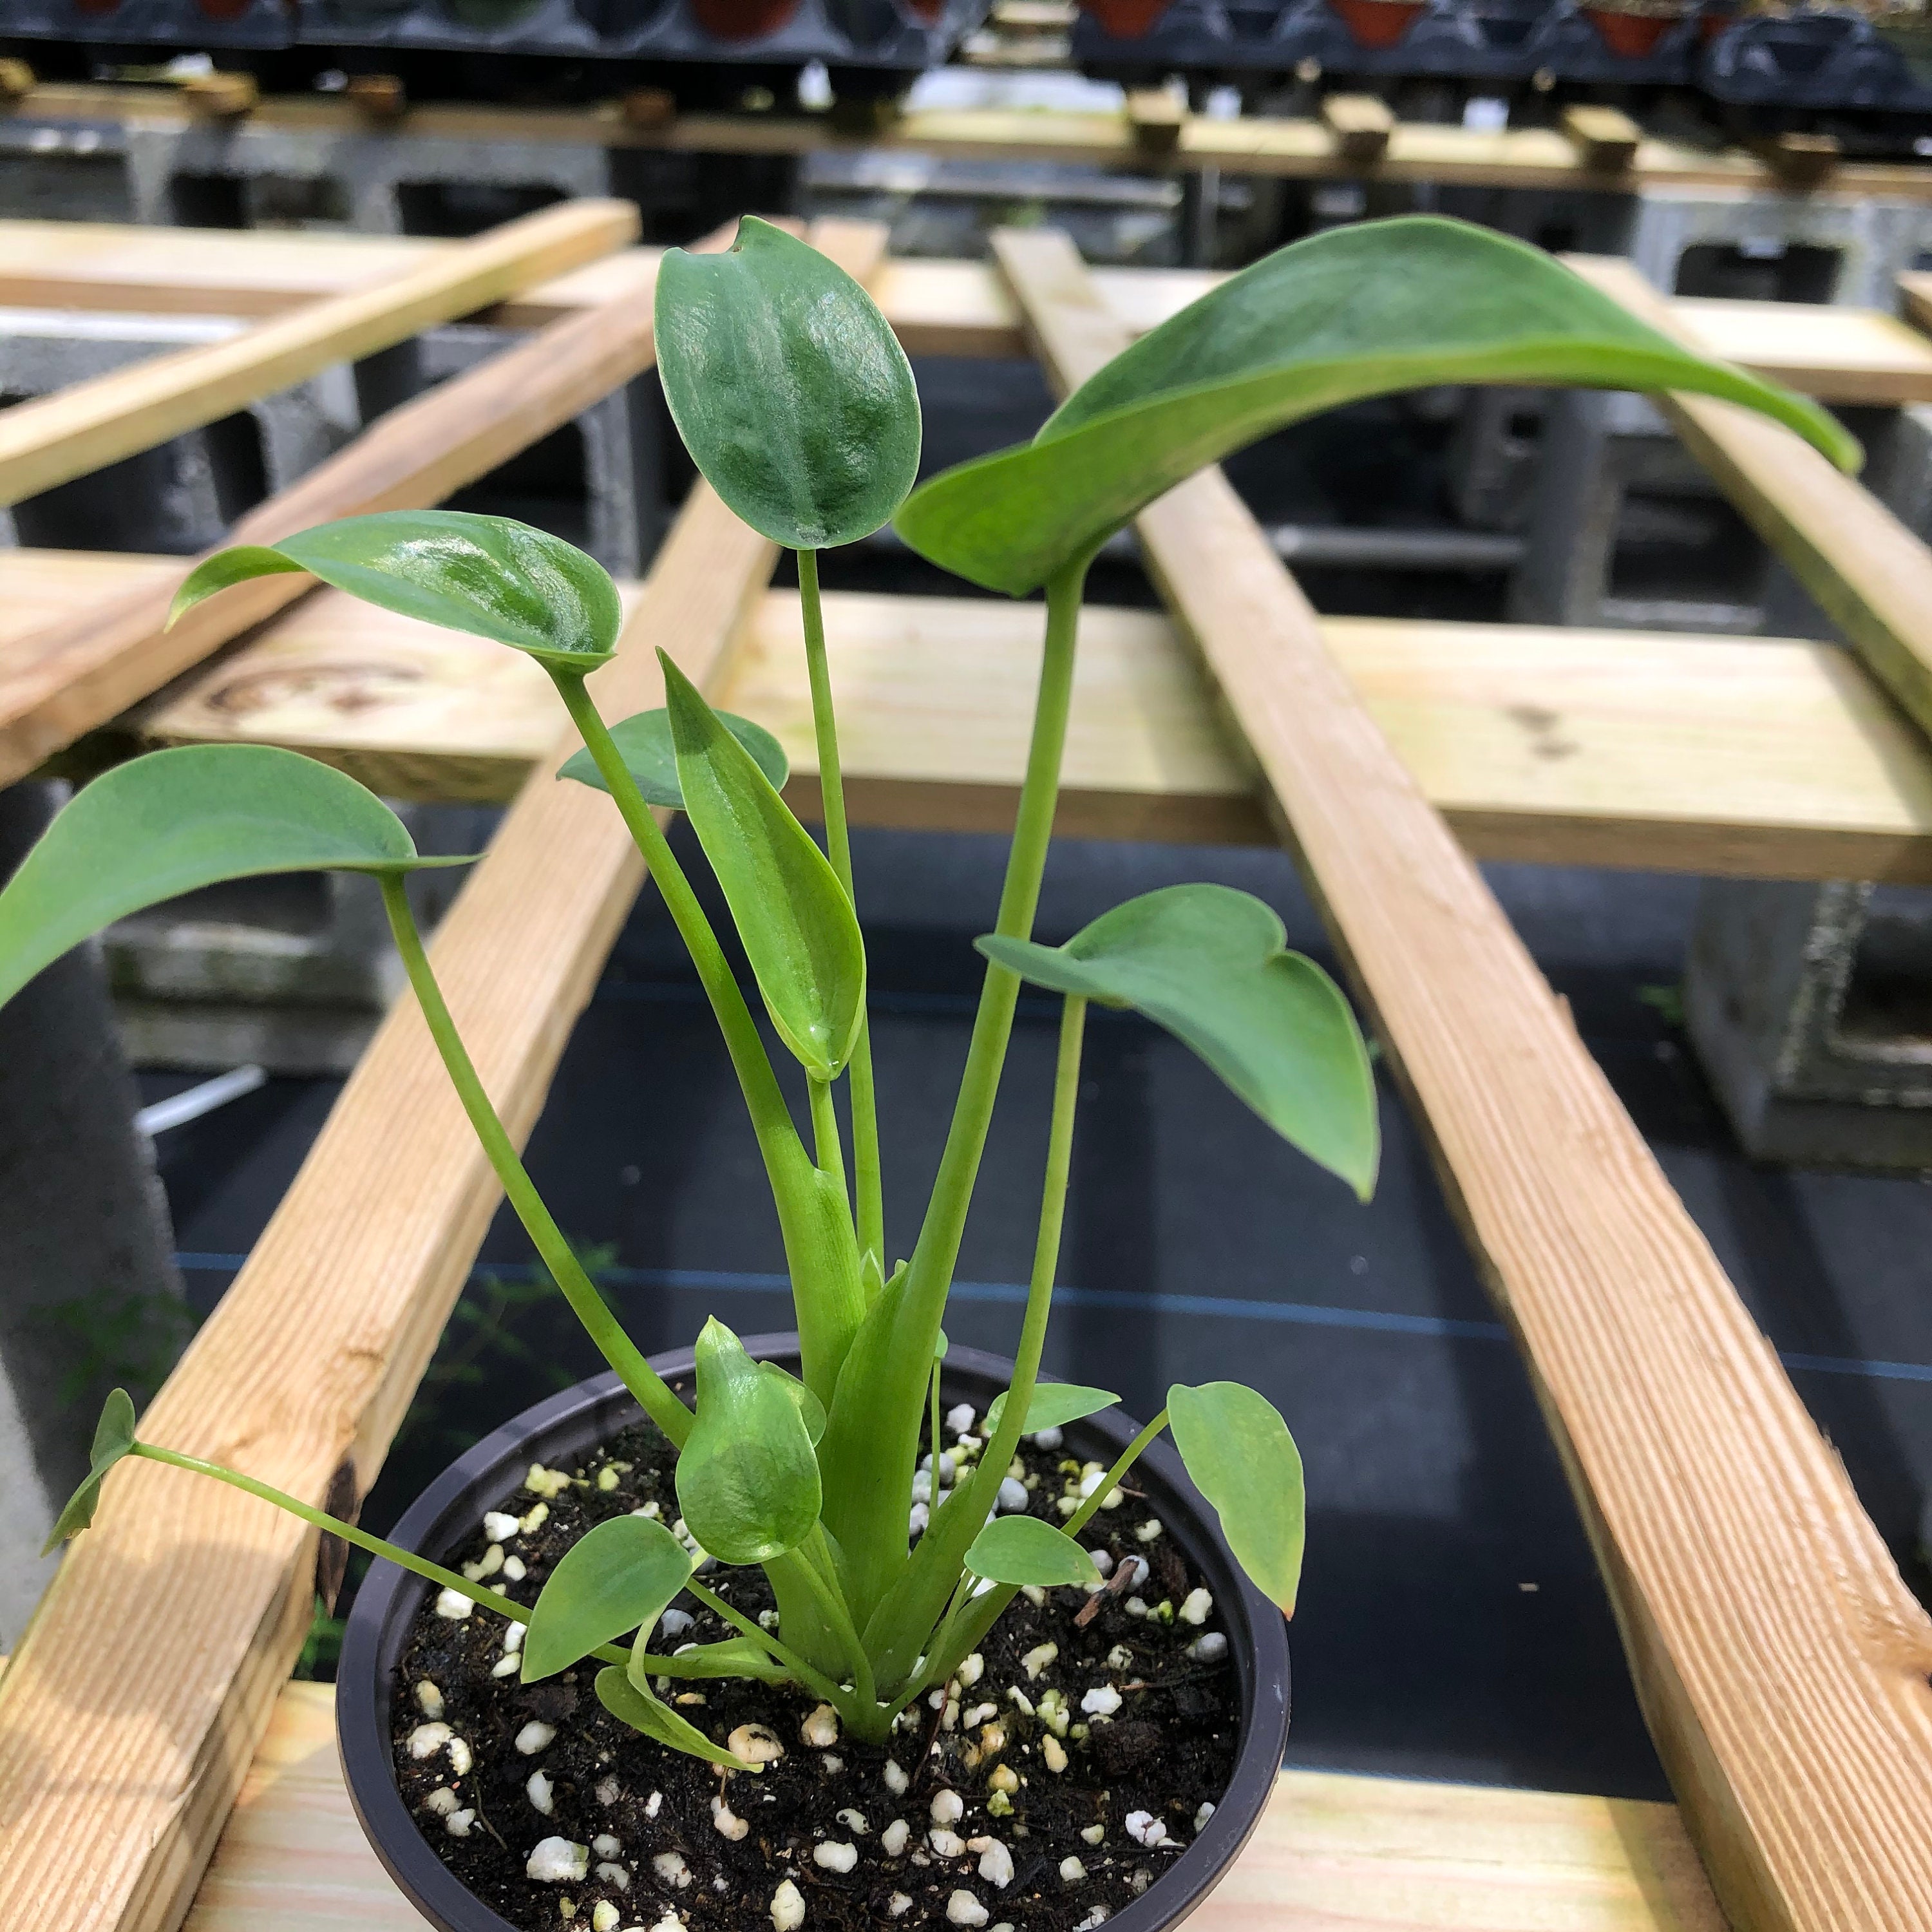 Details about   TINY DANCERS Alocasia Dwarf Aroid Rare Live Indoor Plant Unique Easy to Grow 